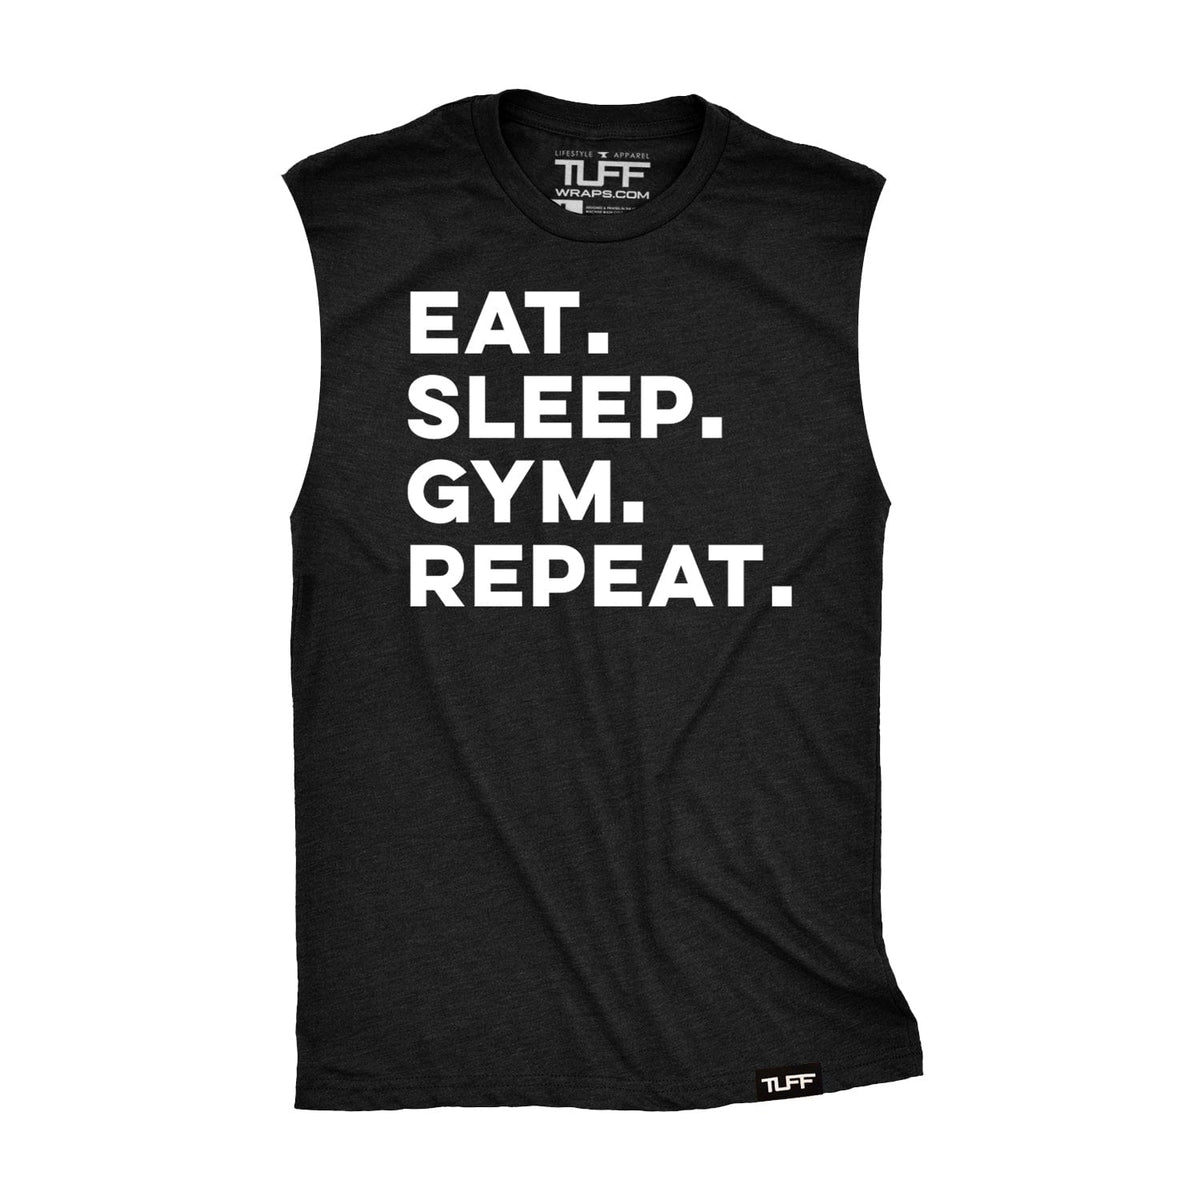 Eat. Sleep. Gym. Repeat. Raw Edge Muscle Tank S / Black TuffWraps.com